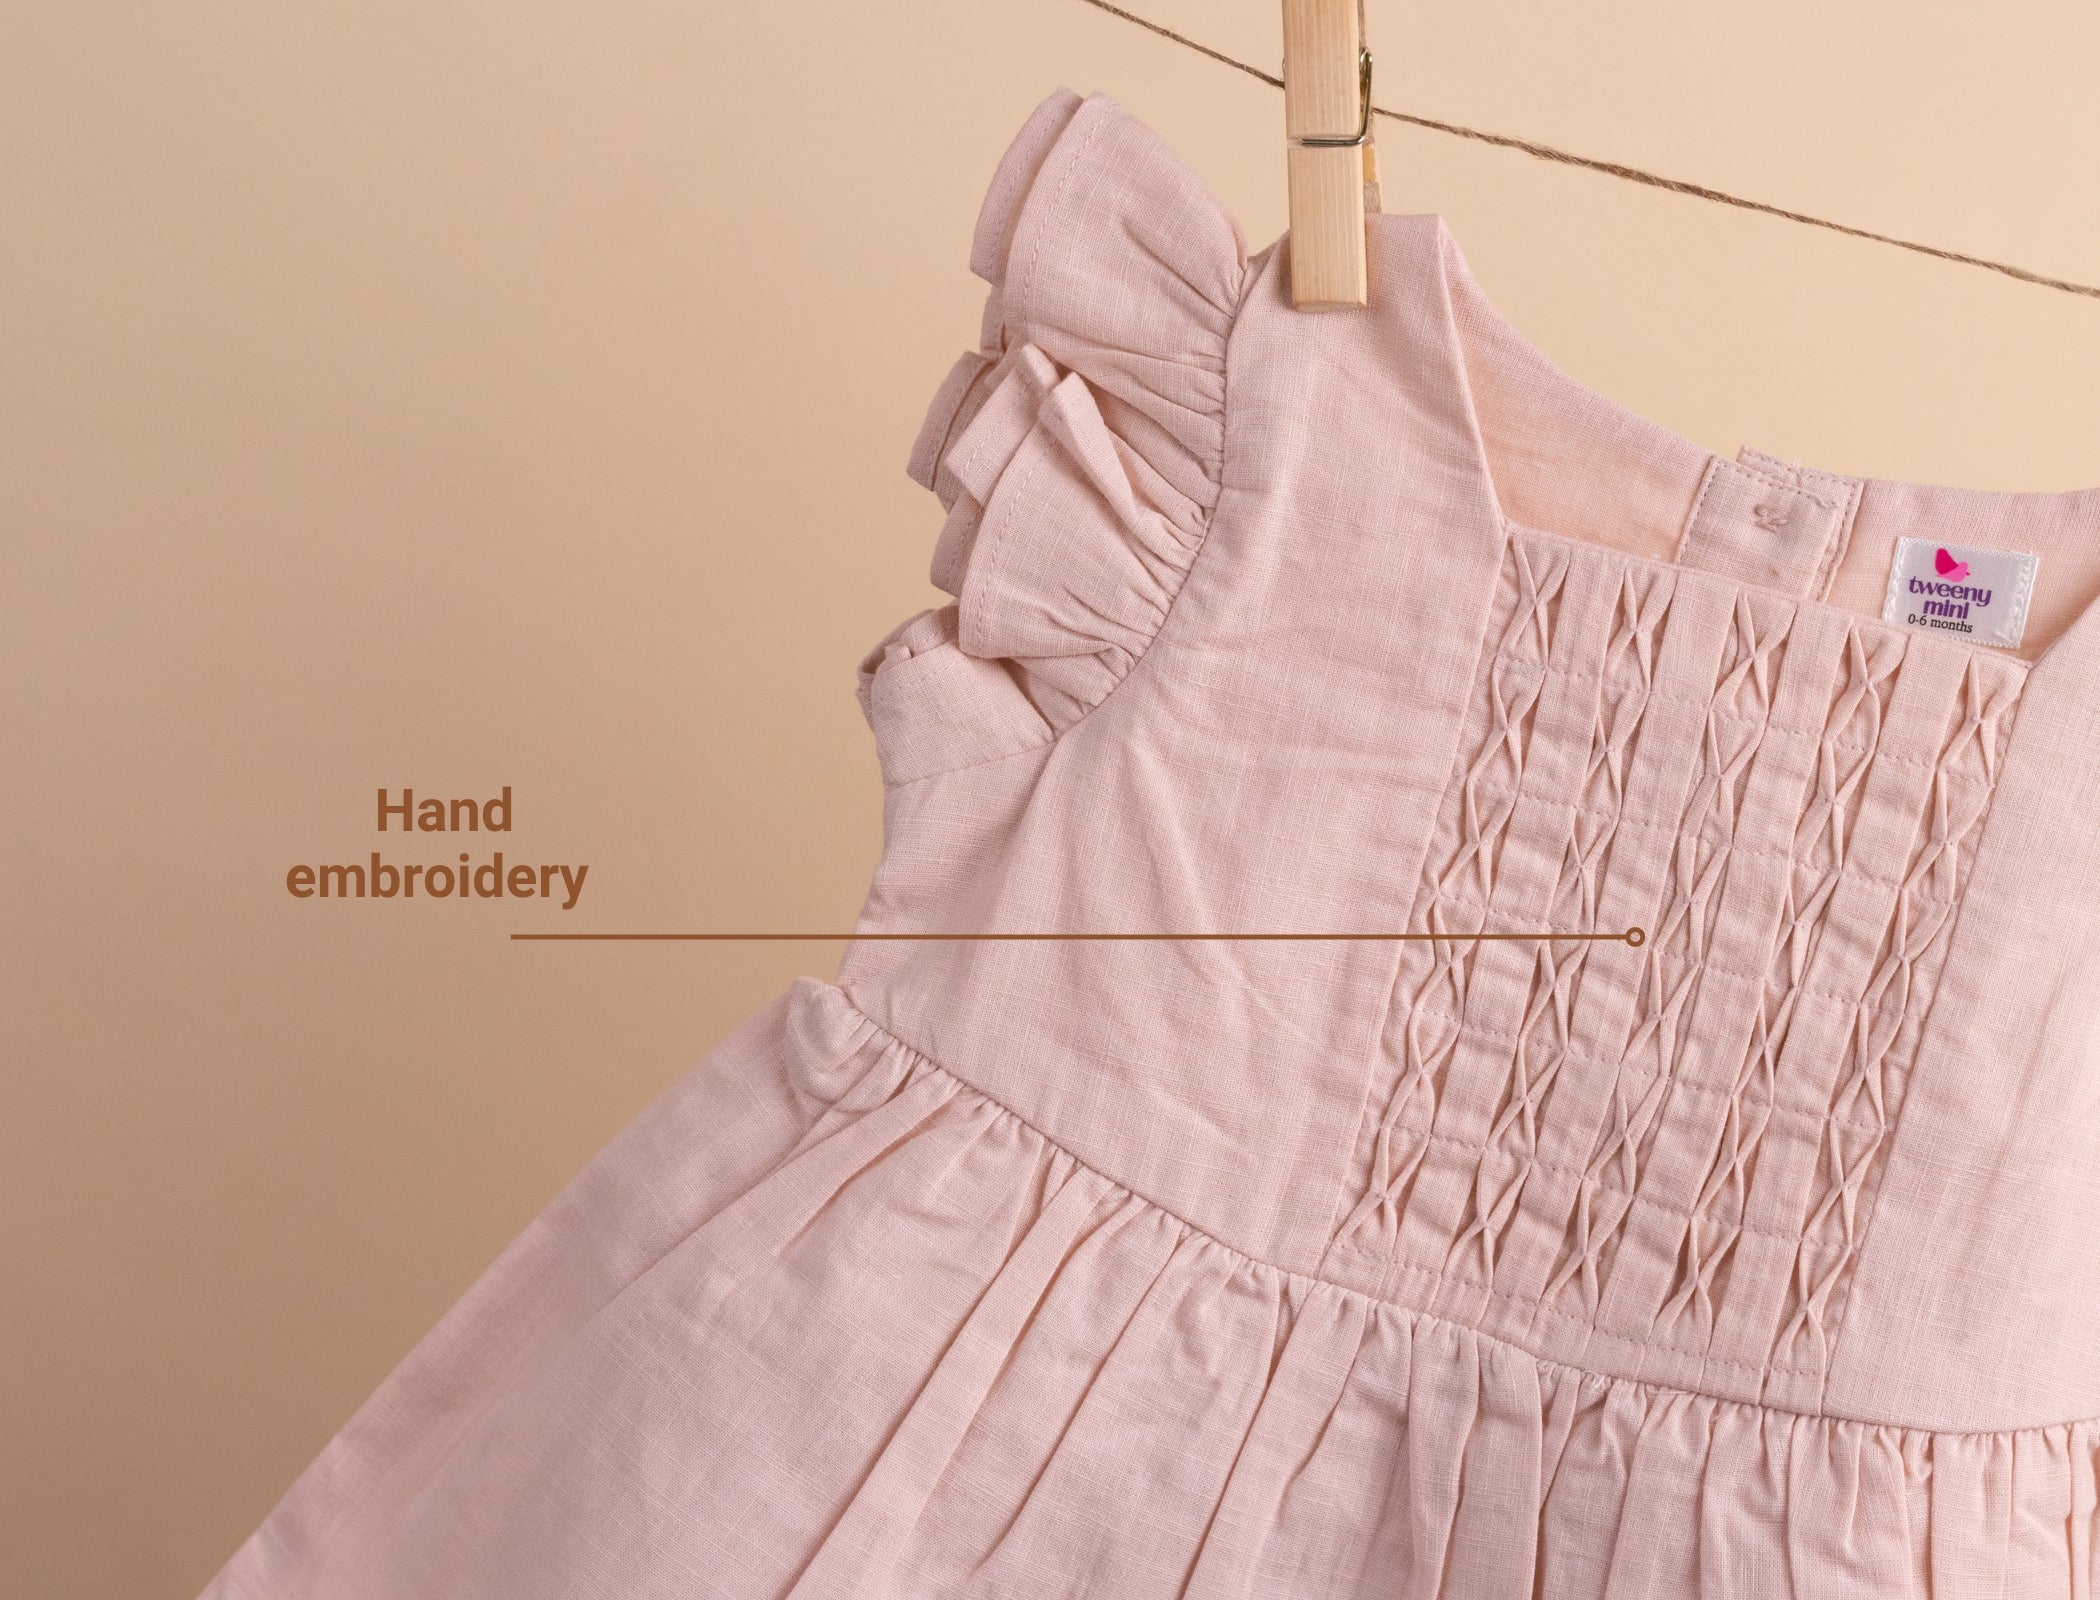 Fareto New Born Baby's Hosiery Cotton Wear Items in a Single Packet  (Multicolour, 0-6 Months) -